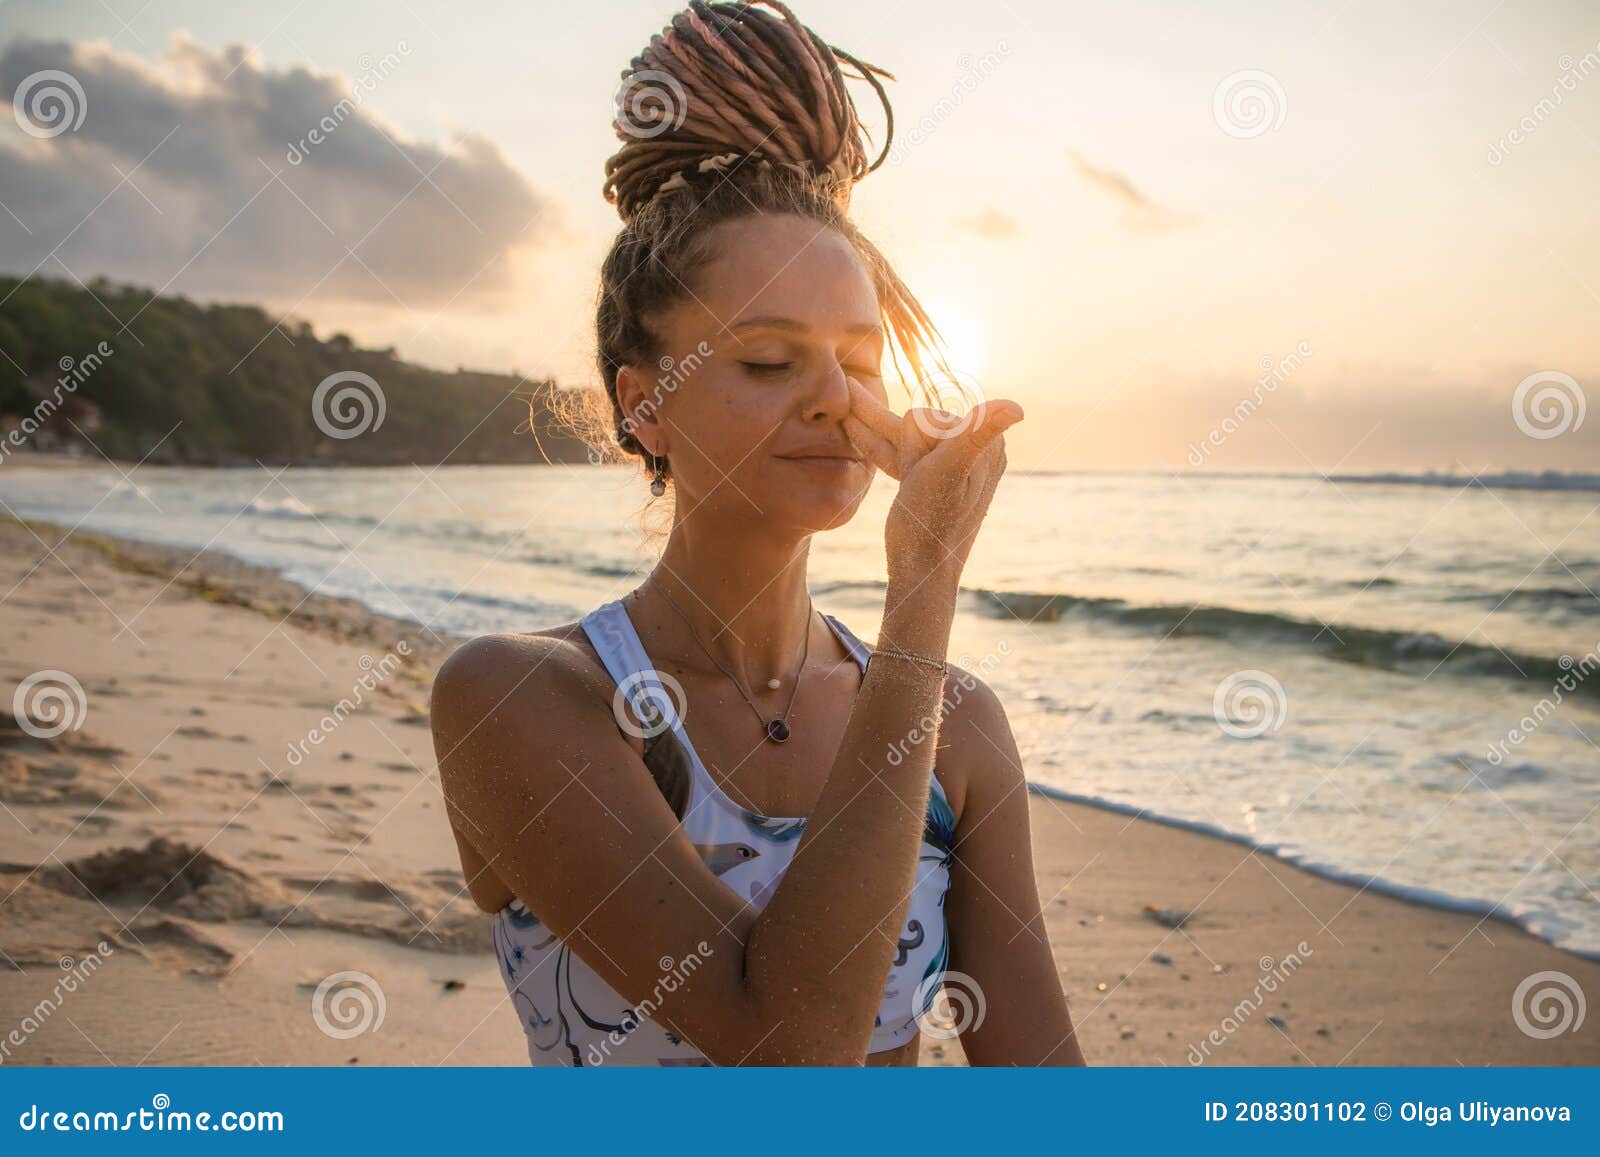 yogi woman practicing nadi shodhana pranayama, alternate nostril breathing. control prana, control of breath. breathing exercise.